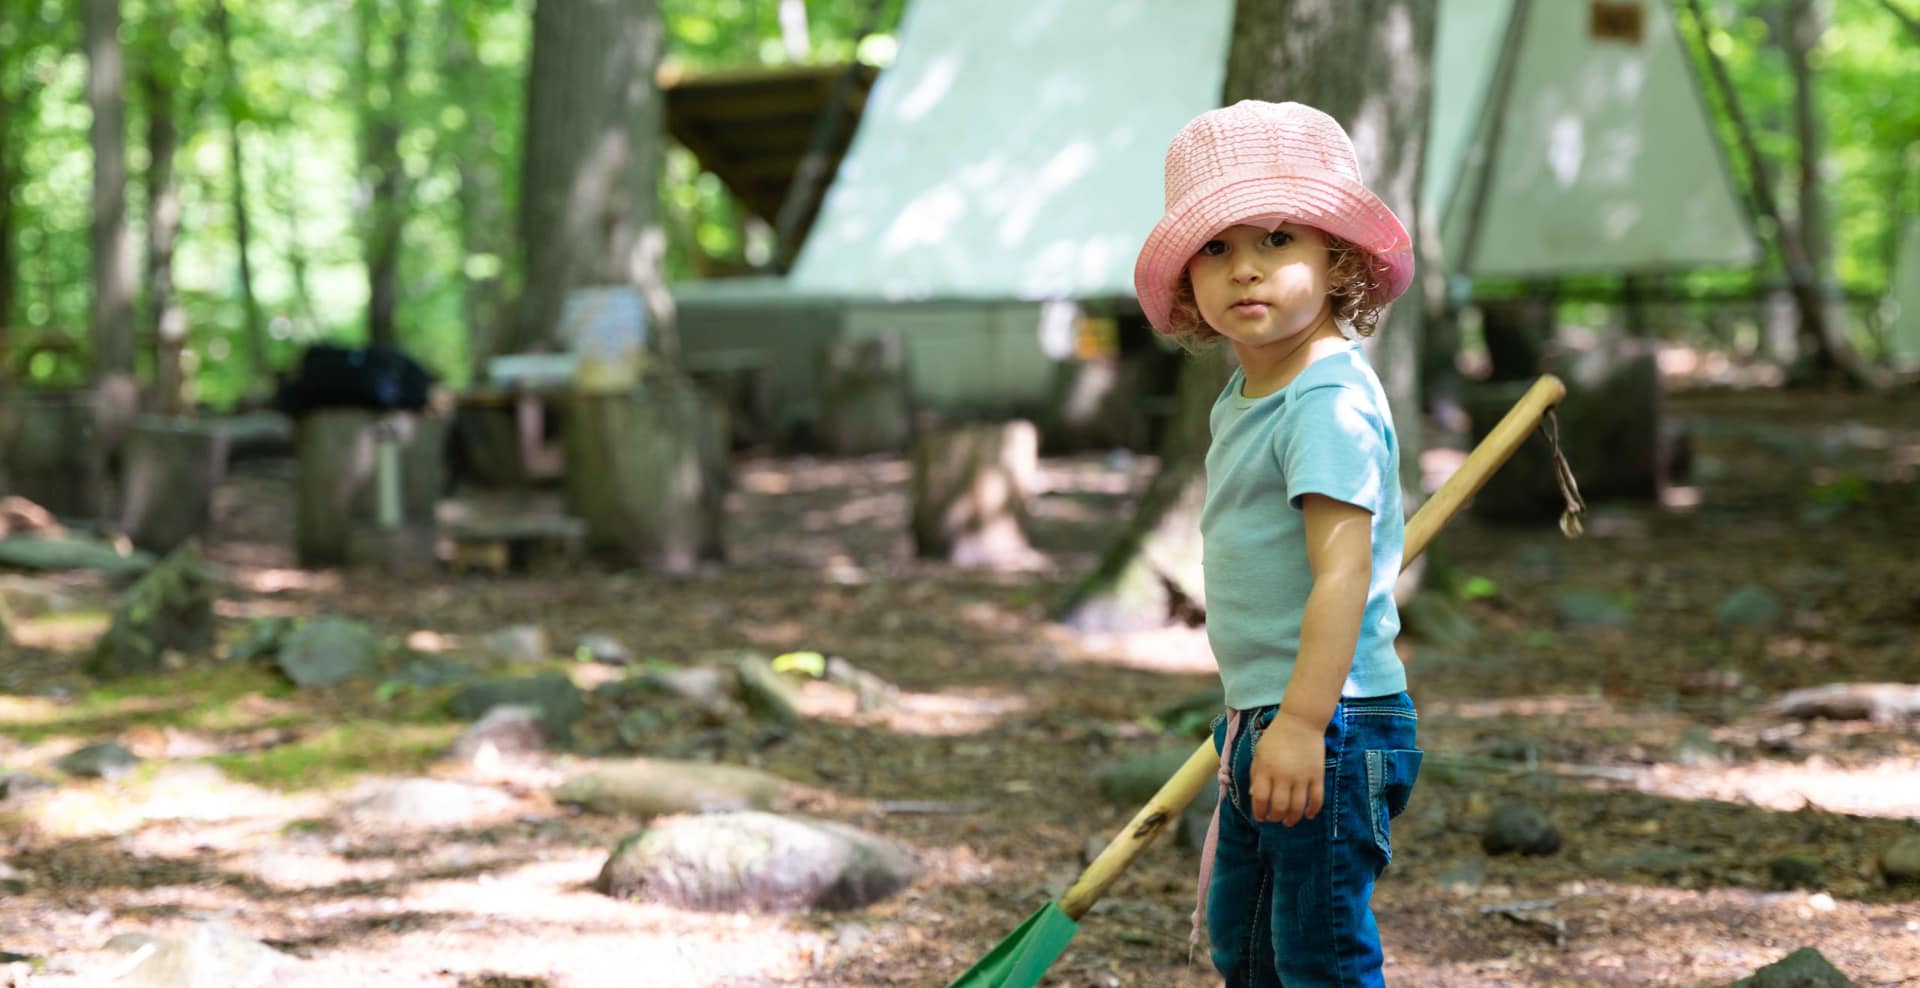 Child holding rake.